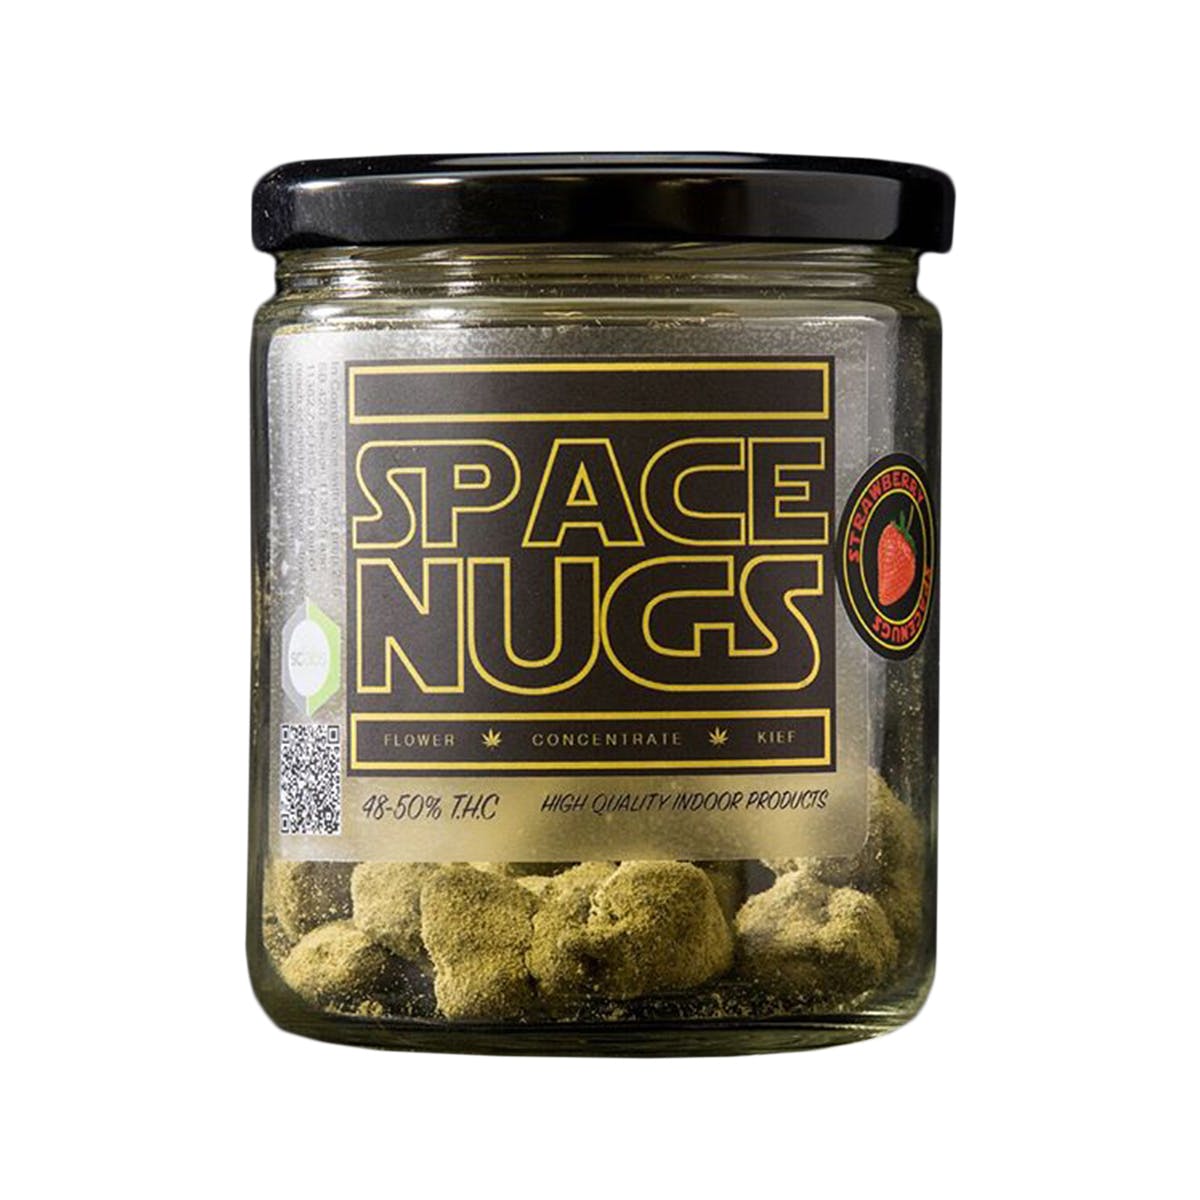 marijuana-dispensaries-herb-garden-collective-downtown-la-in-los-angeles-strawberry-space-nugs